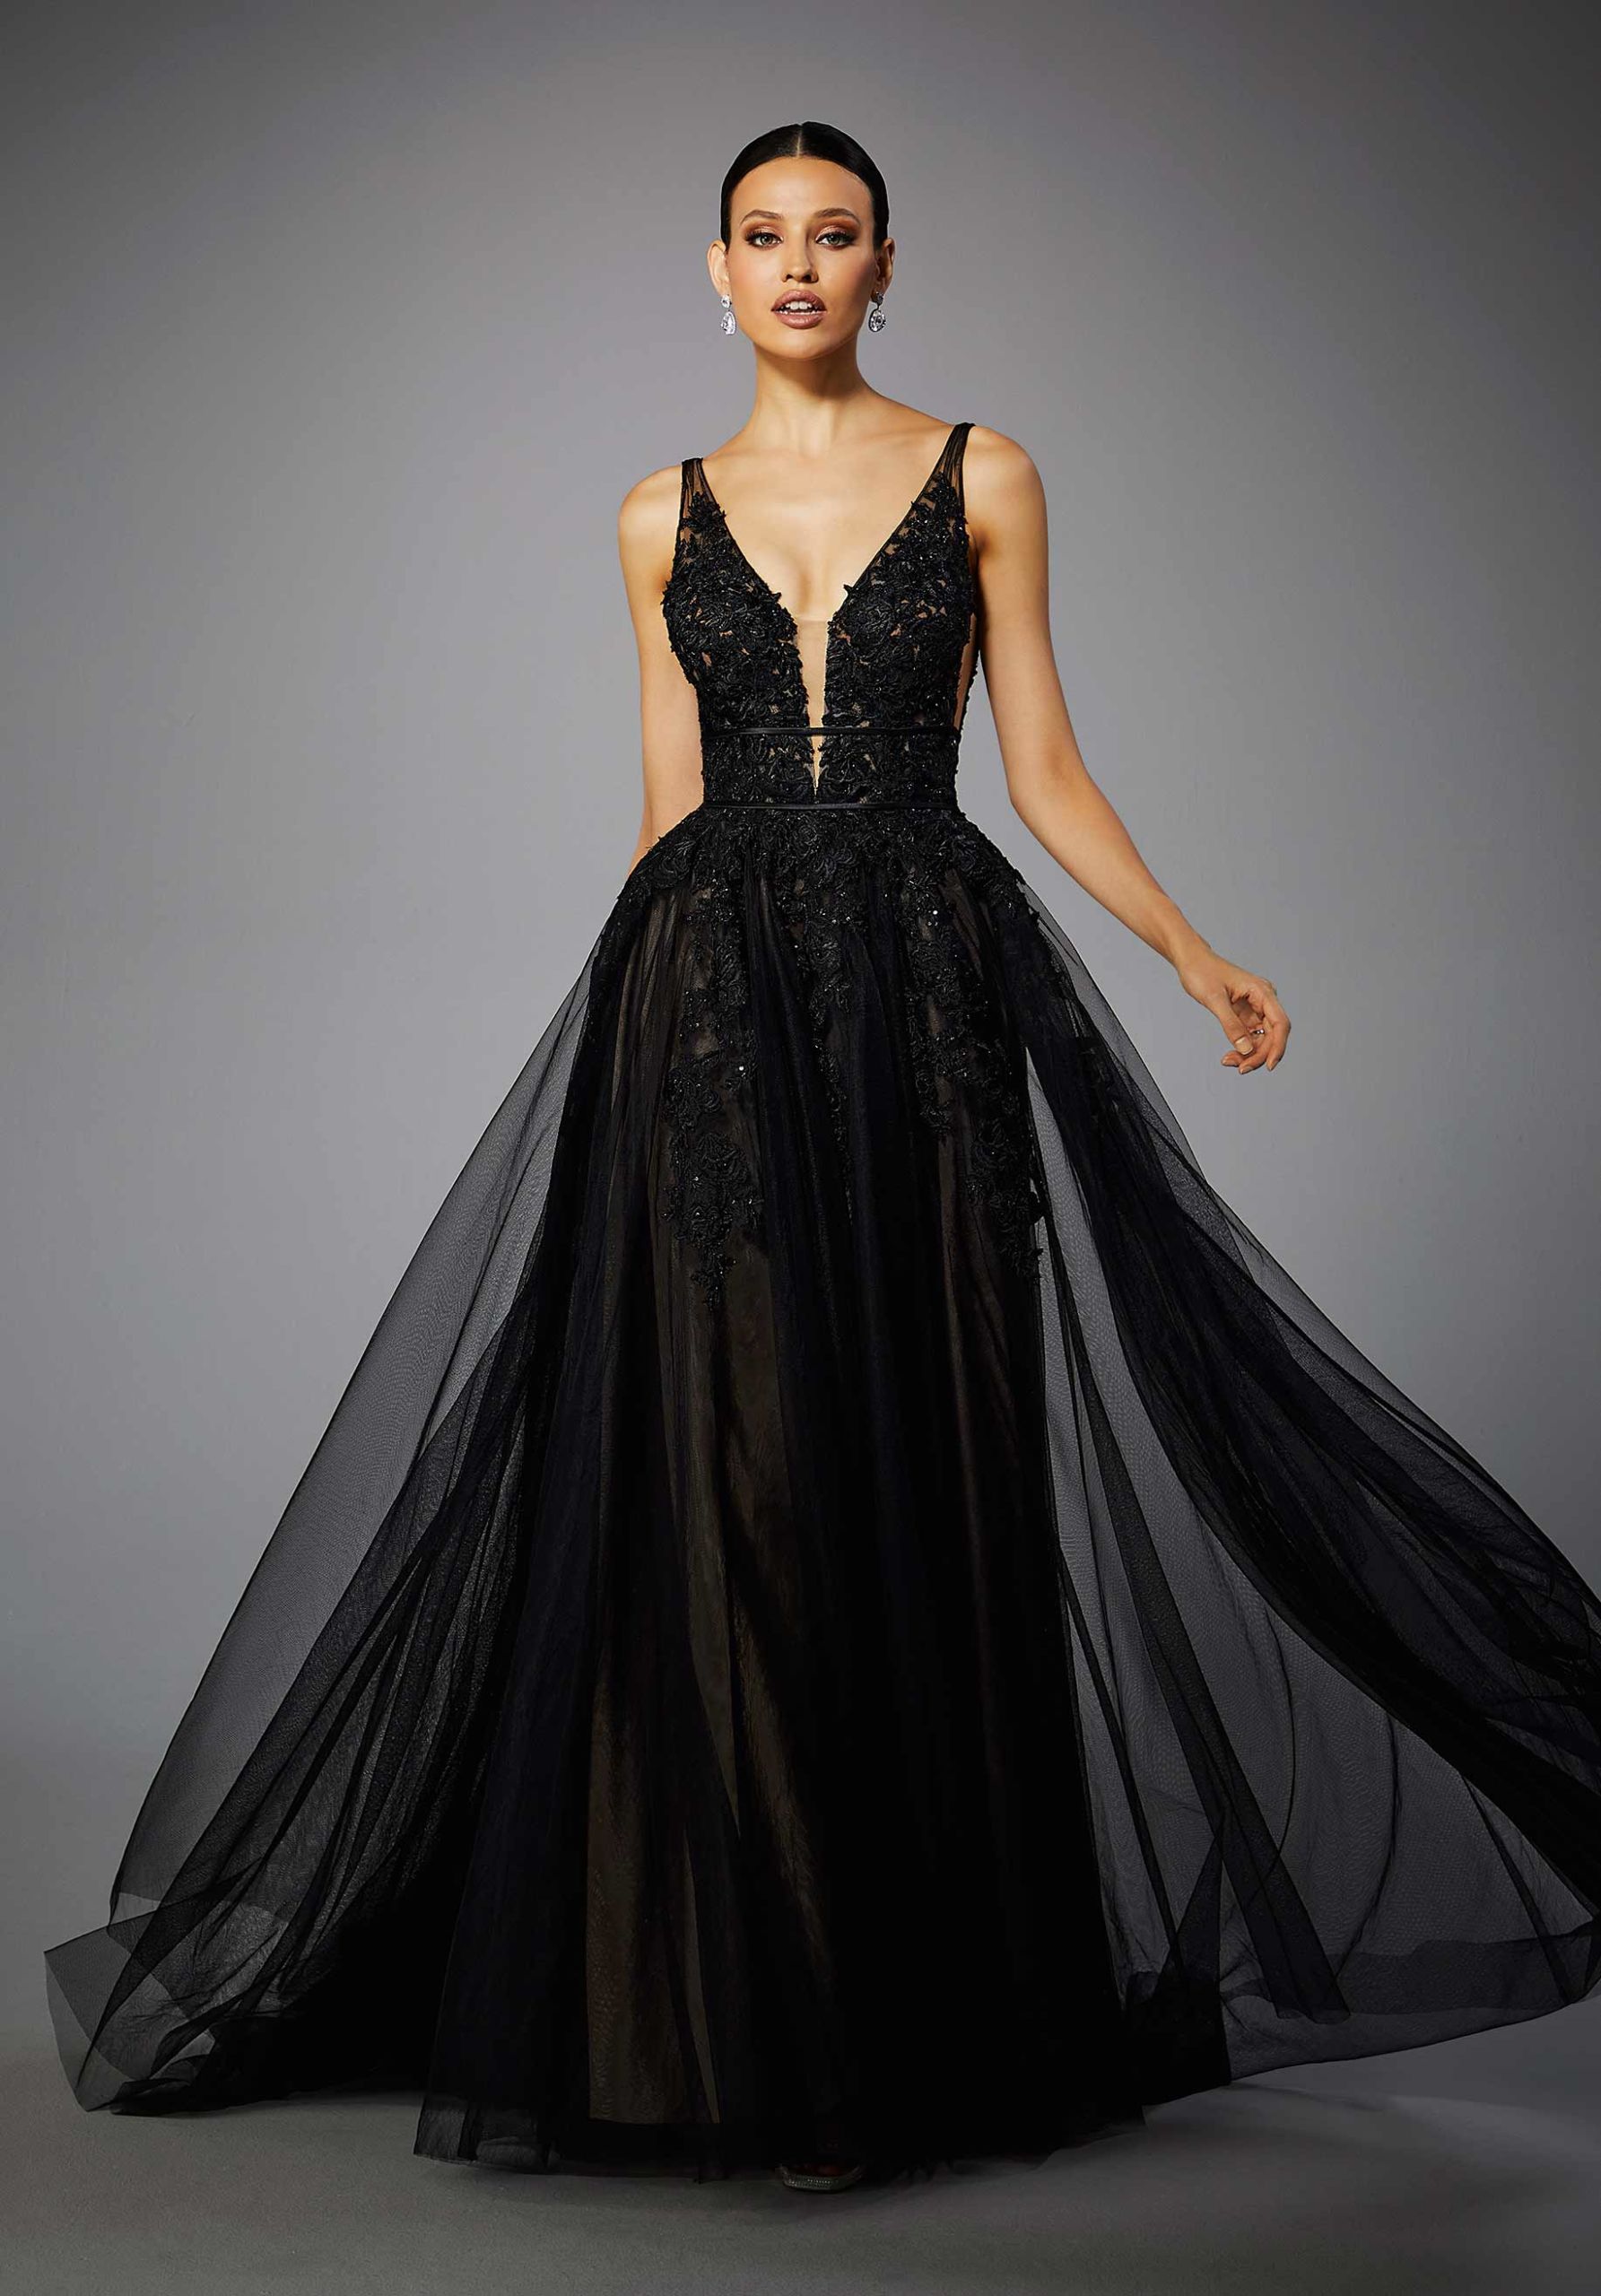 27 Fantastic Black Wedding Dresses To Fall In Love With | Black wedding  gowns, Black evening dresses, Ball gown wedding dress